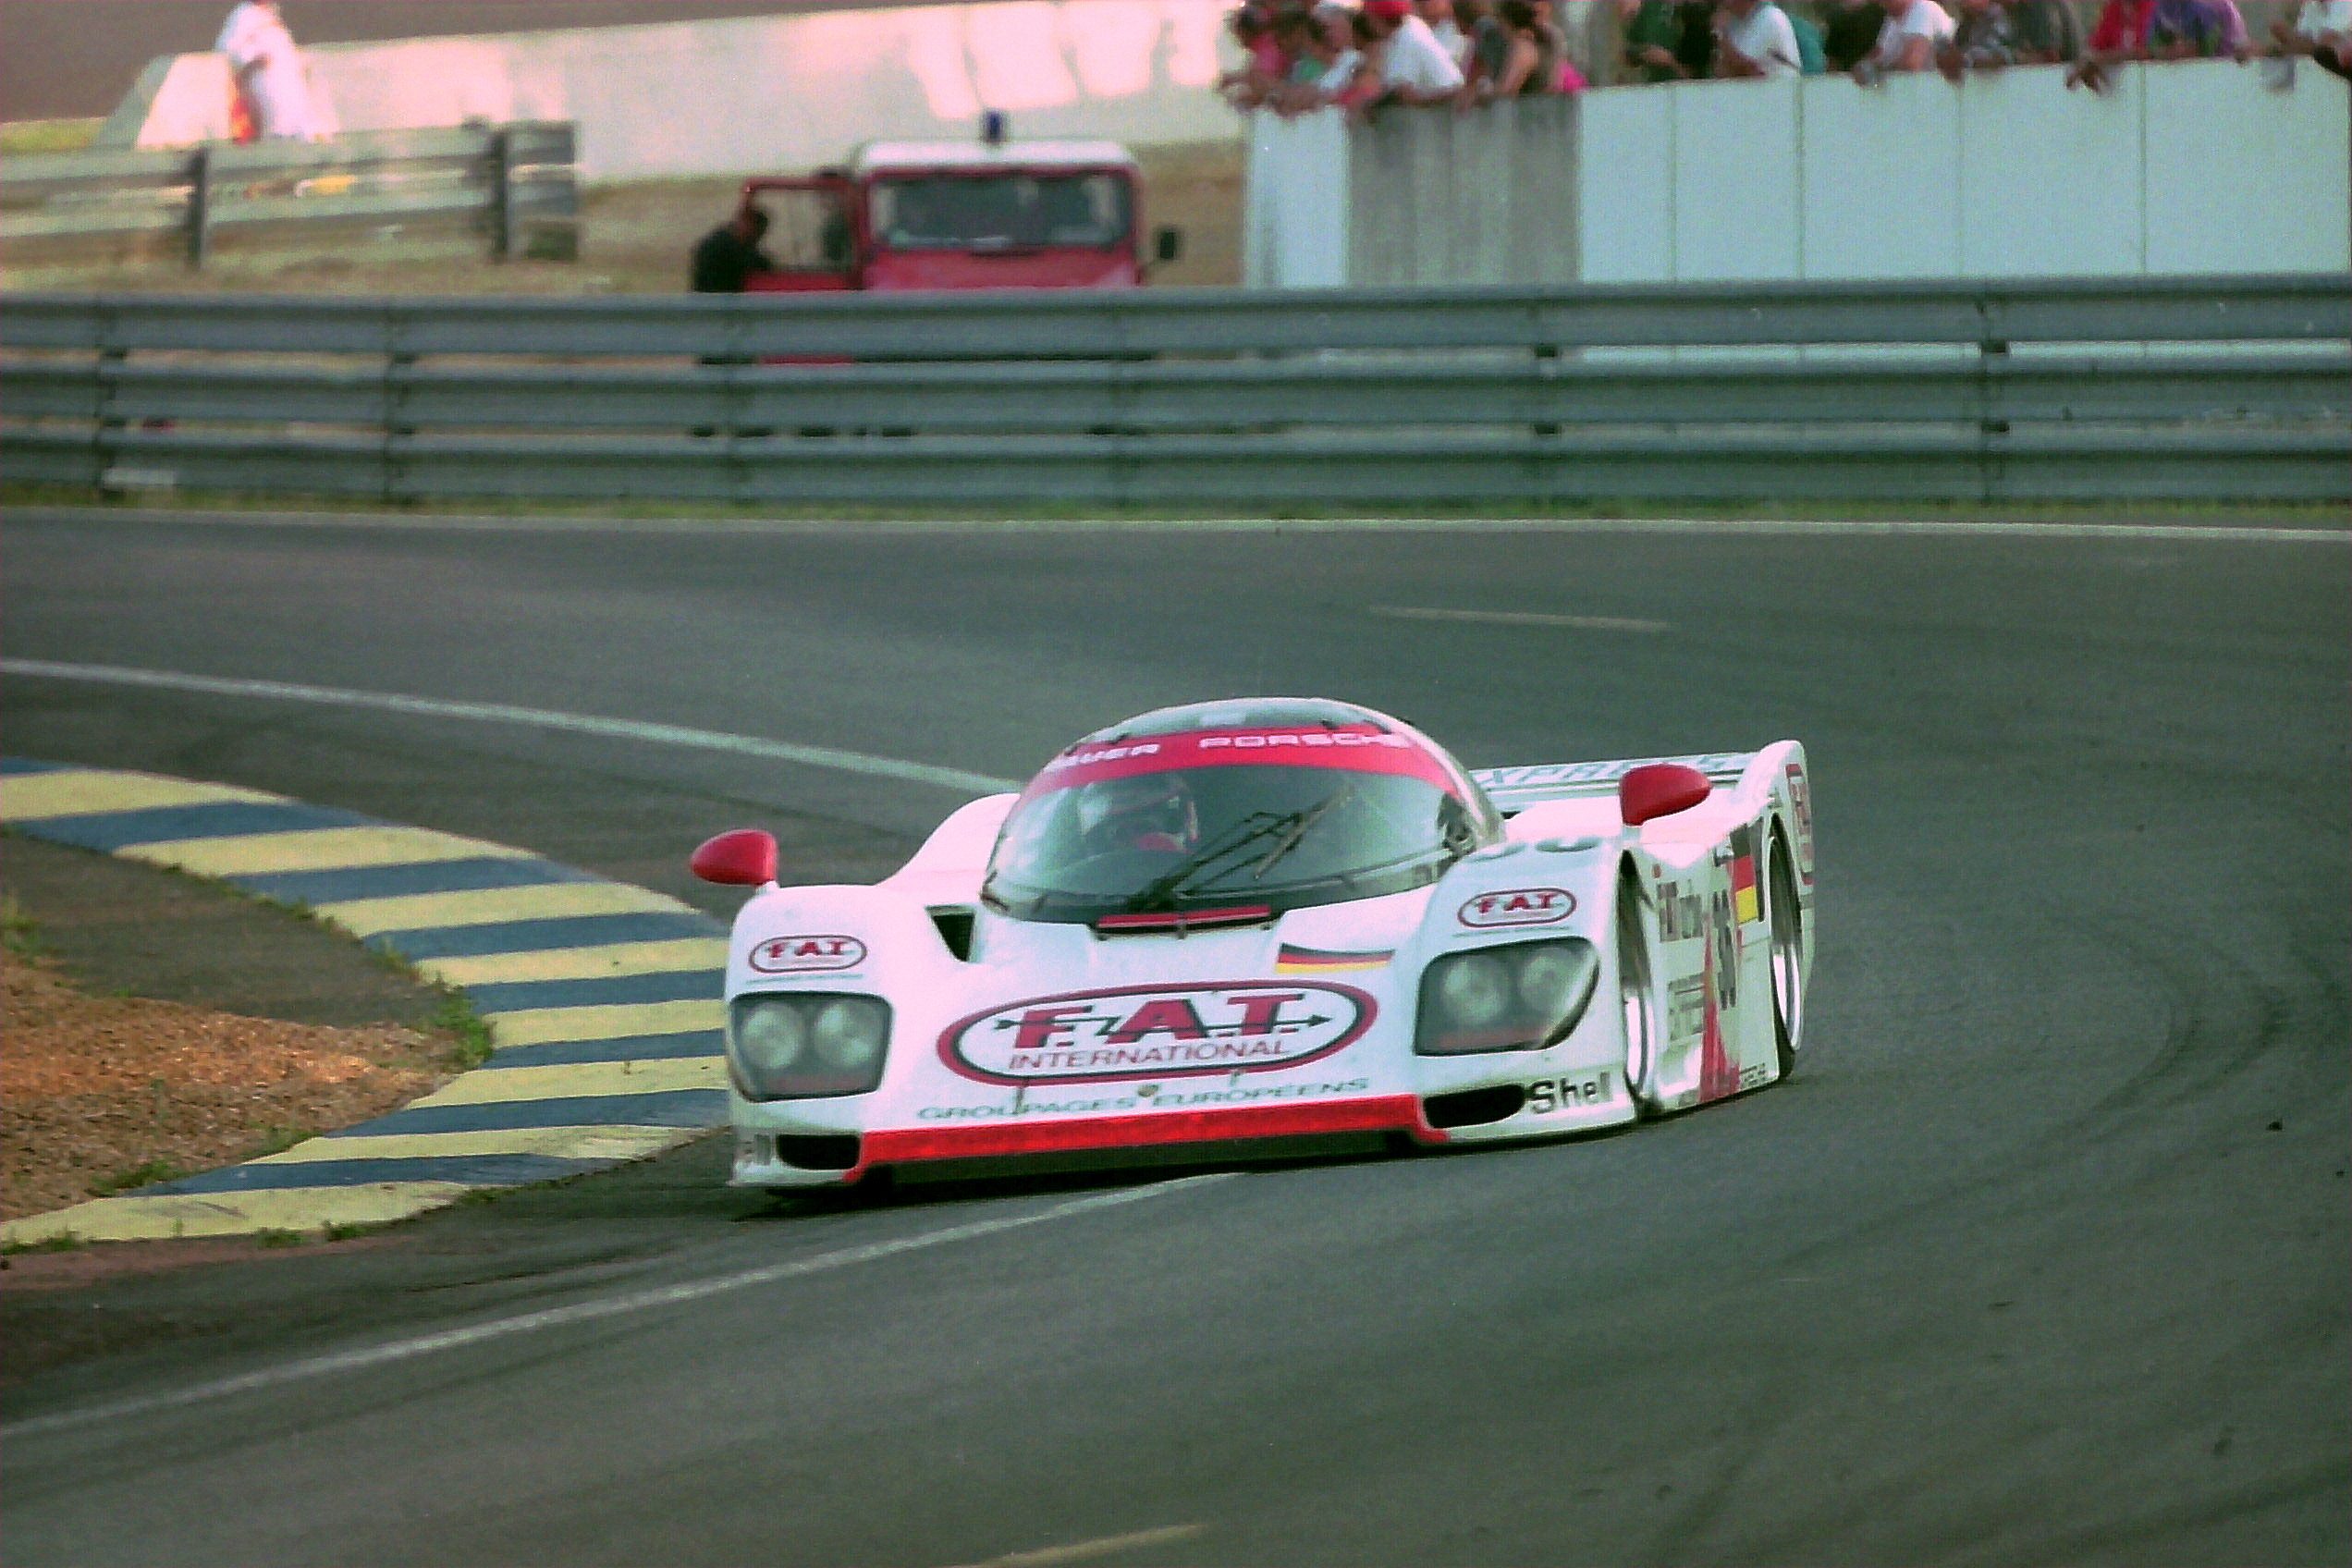 Dauer-962-LM-Mauro-Baldi-Yannick-Dalmas-Hurley-Haywood-in-the-Esses-at-the-1994-Le-Mans-31130424354.jpg